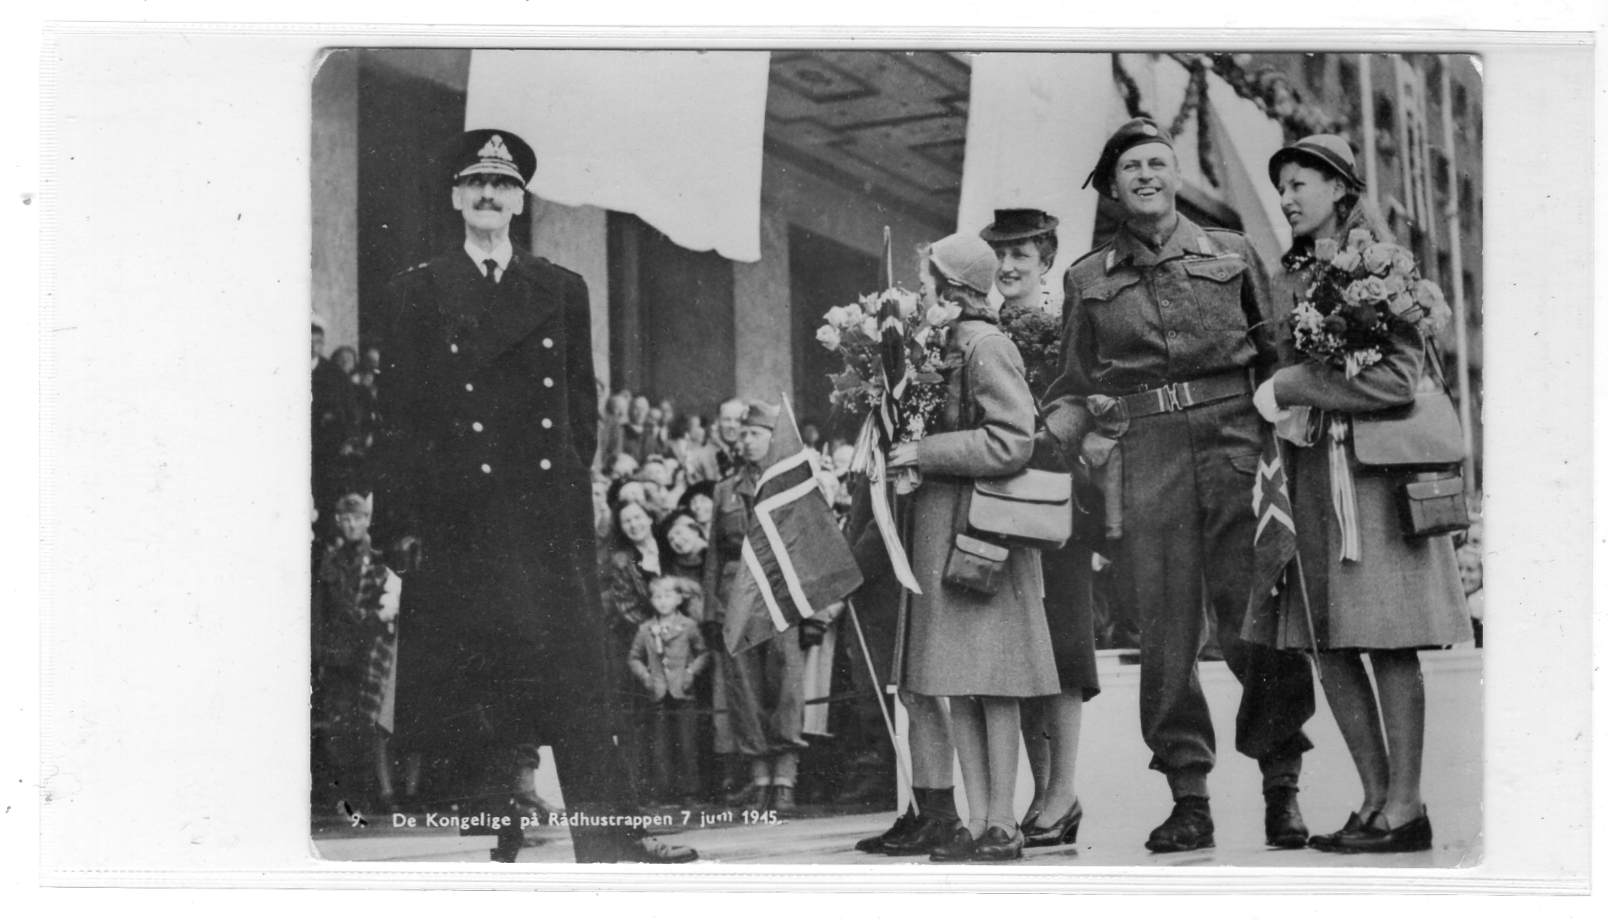 De kongelige på rådhustrappen 7 juni 1945 Normann